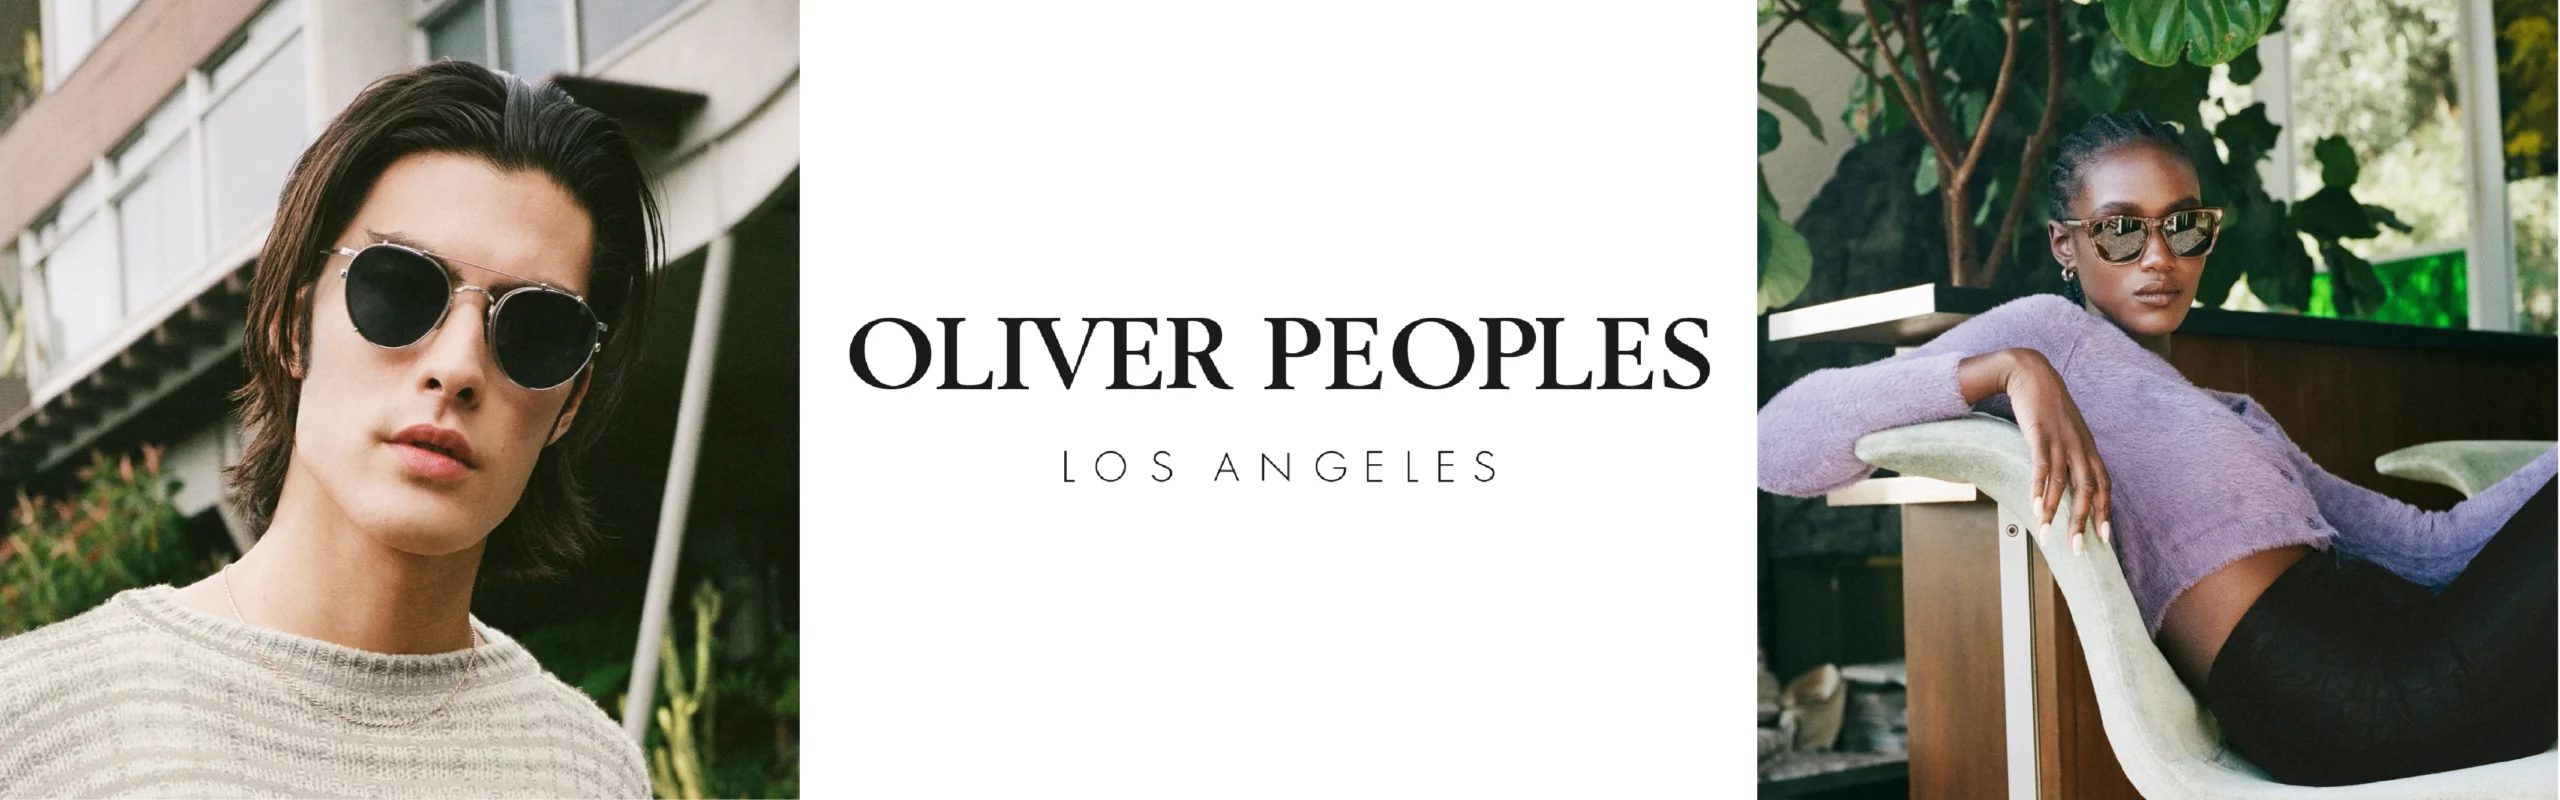 oliver_peoples